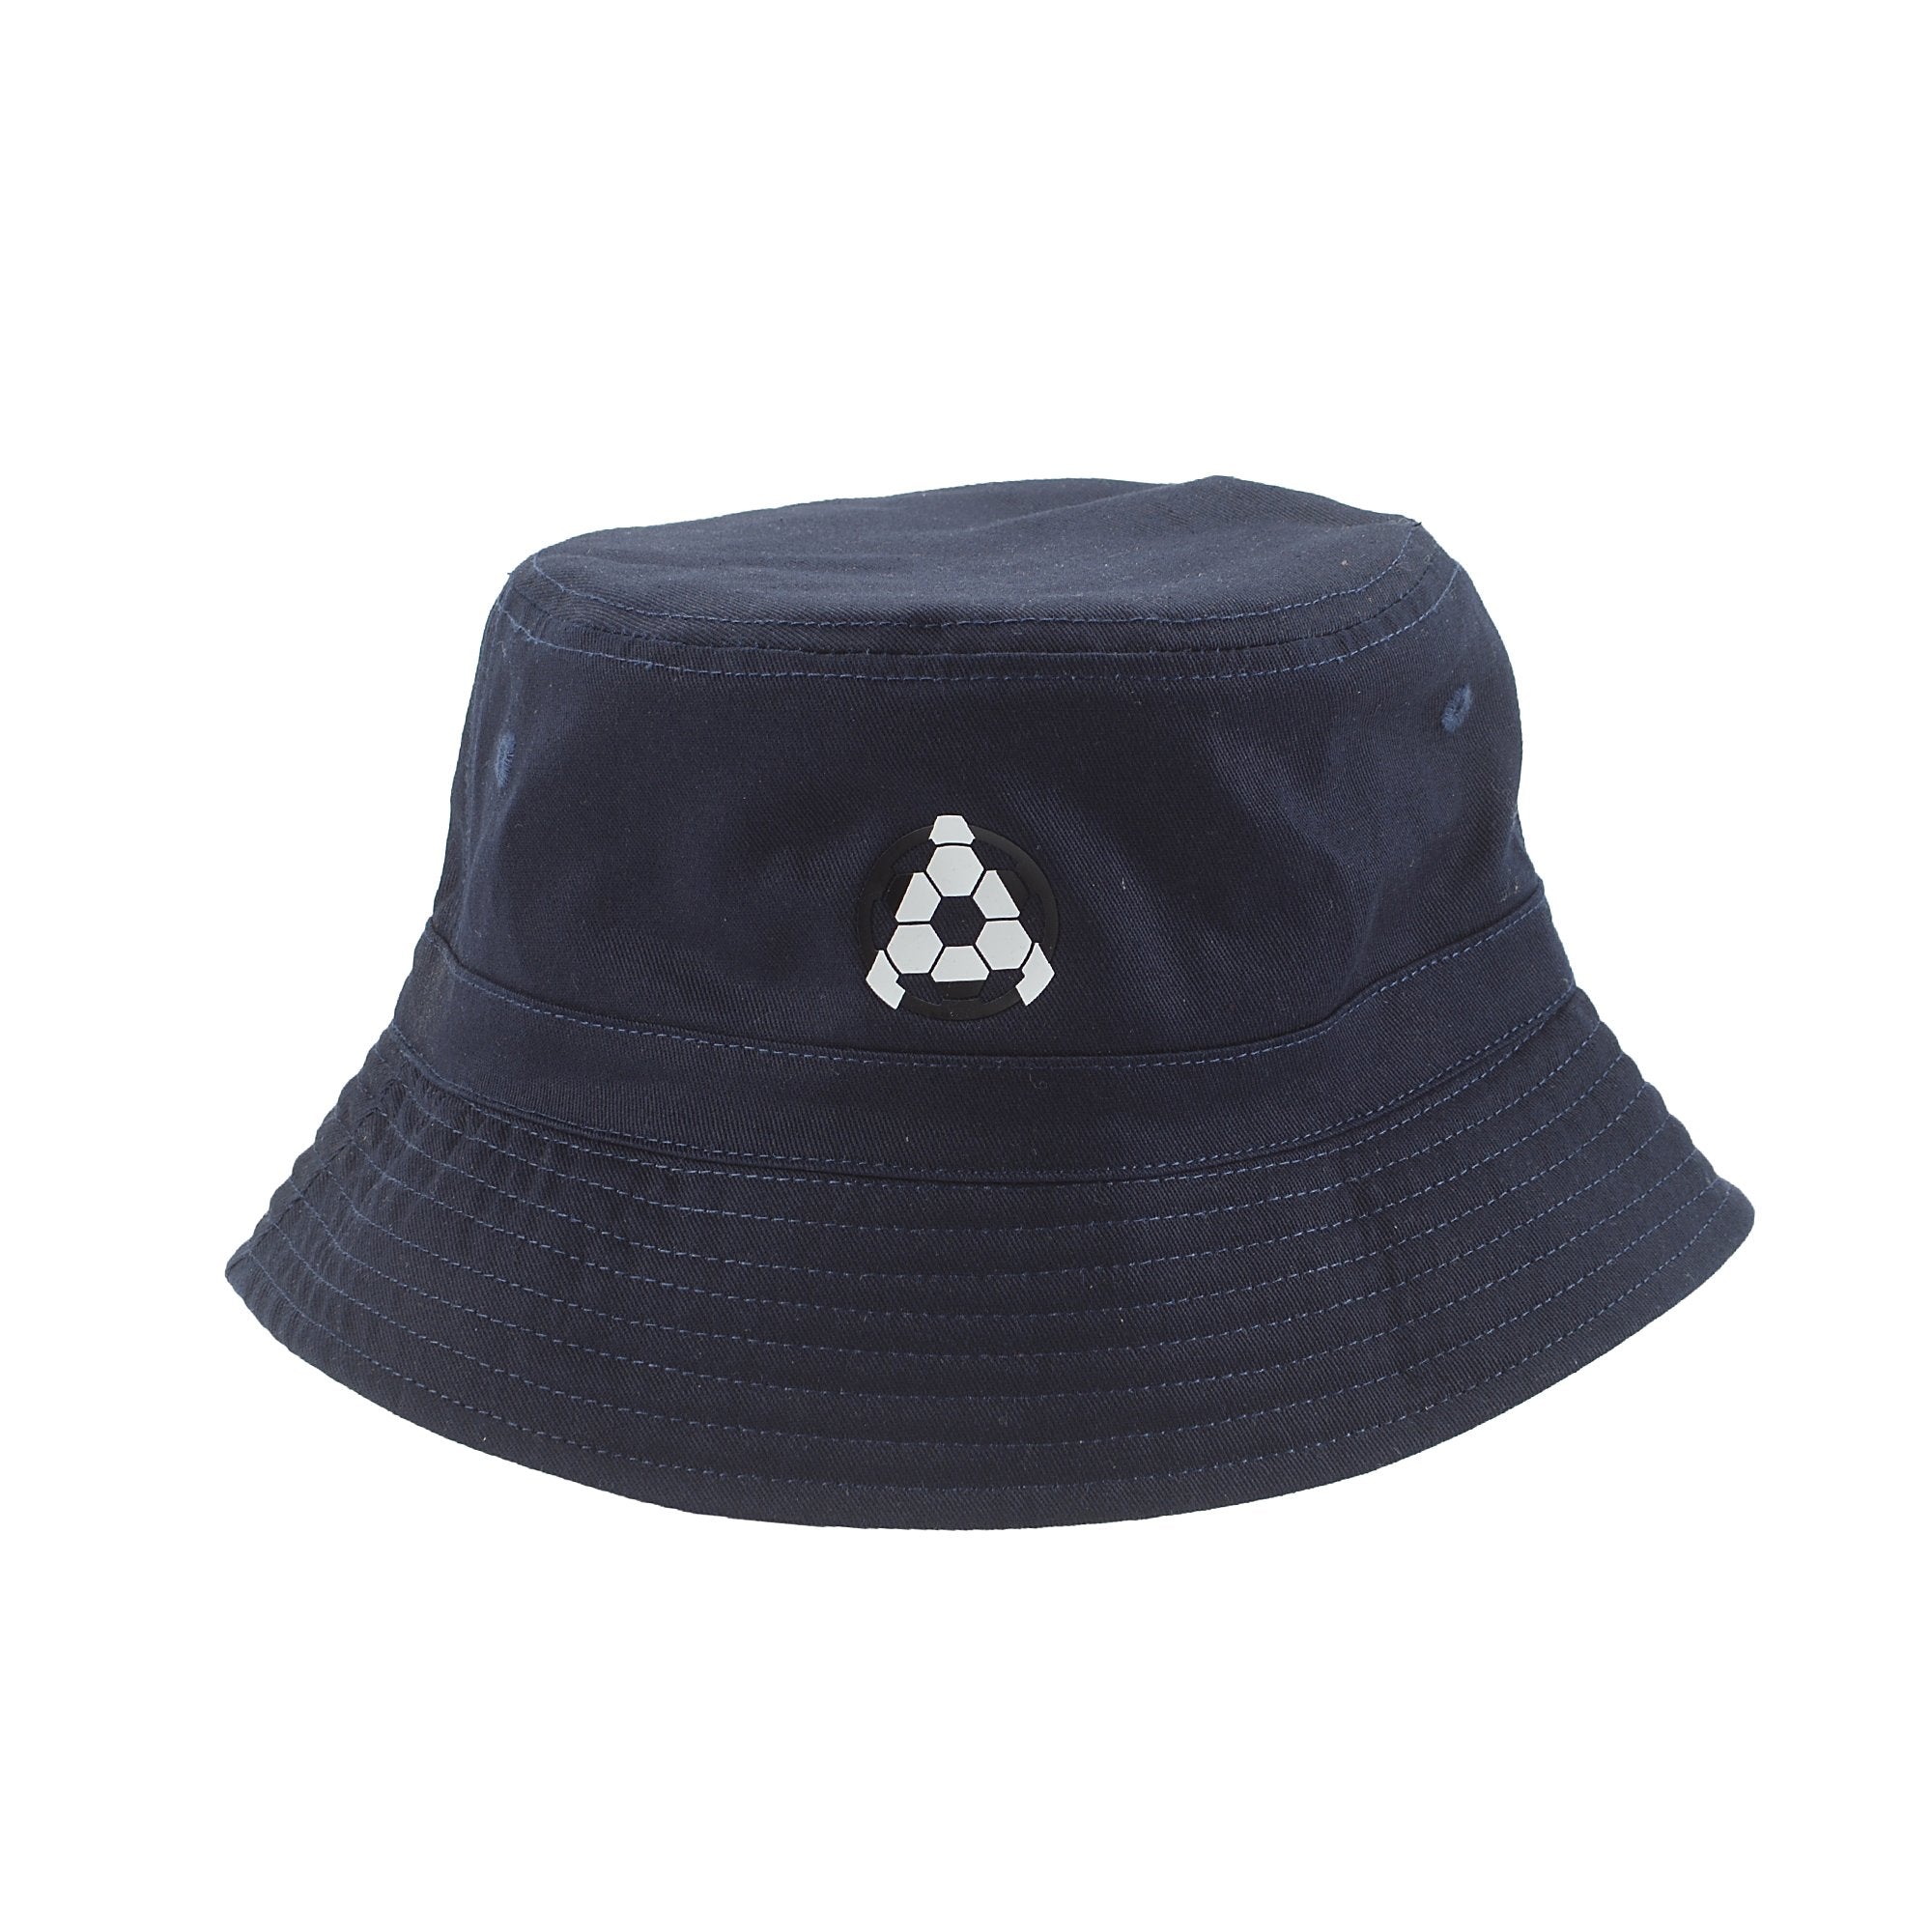 Bucket hat AFCA navy-wit bal logo